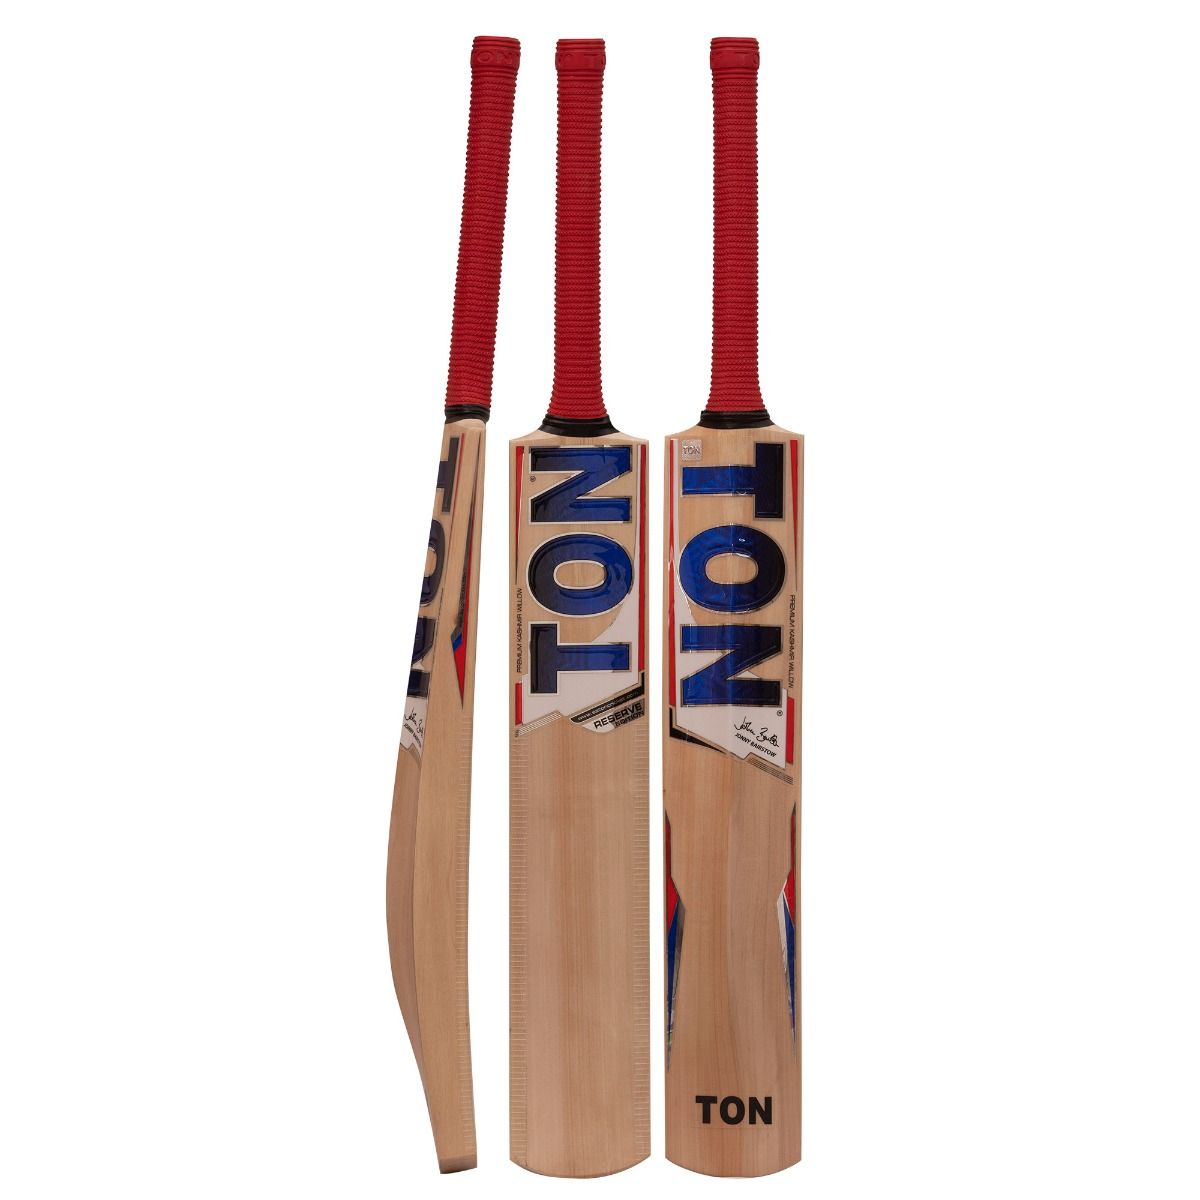 SS Ton Range Reserve Edition Kashmir Willow Cricket Bat - Junior Size 6 (Six)